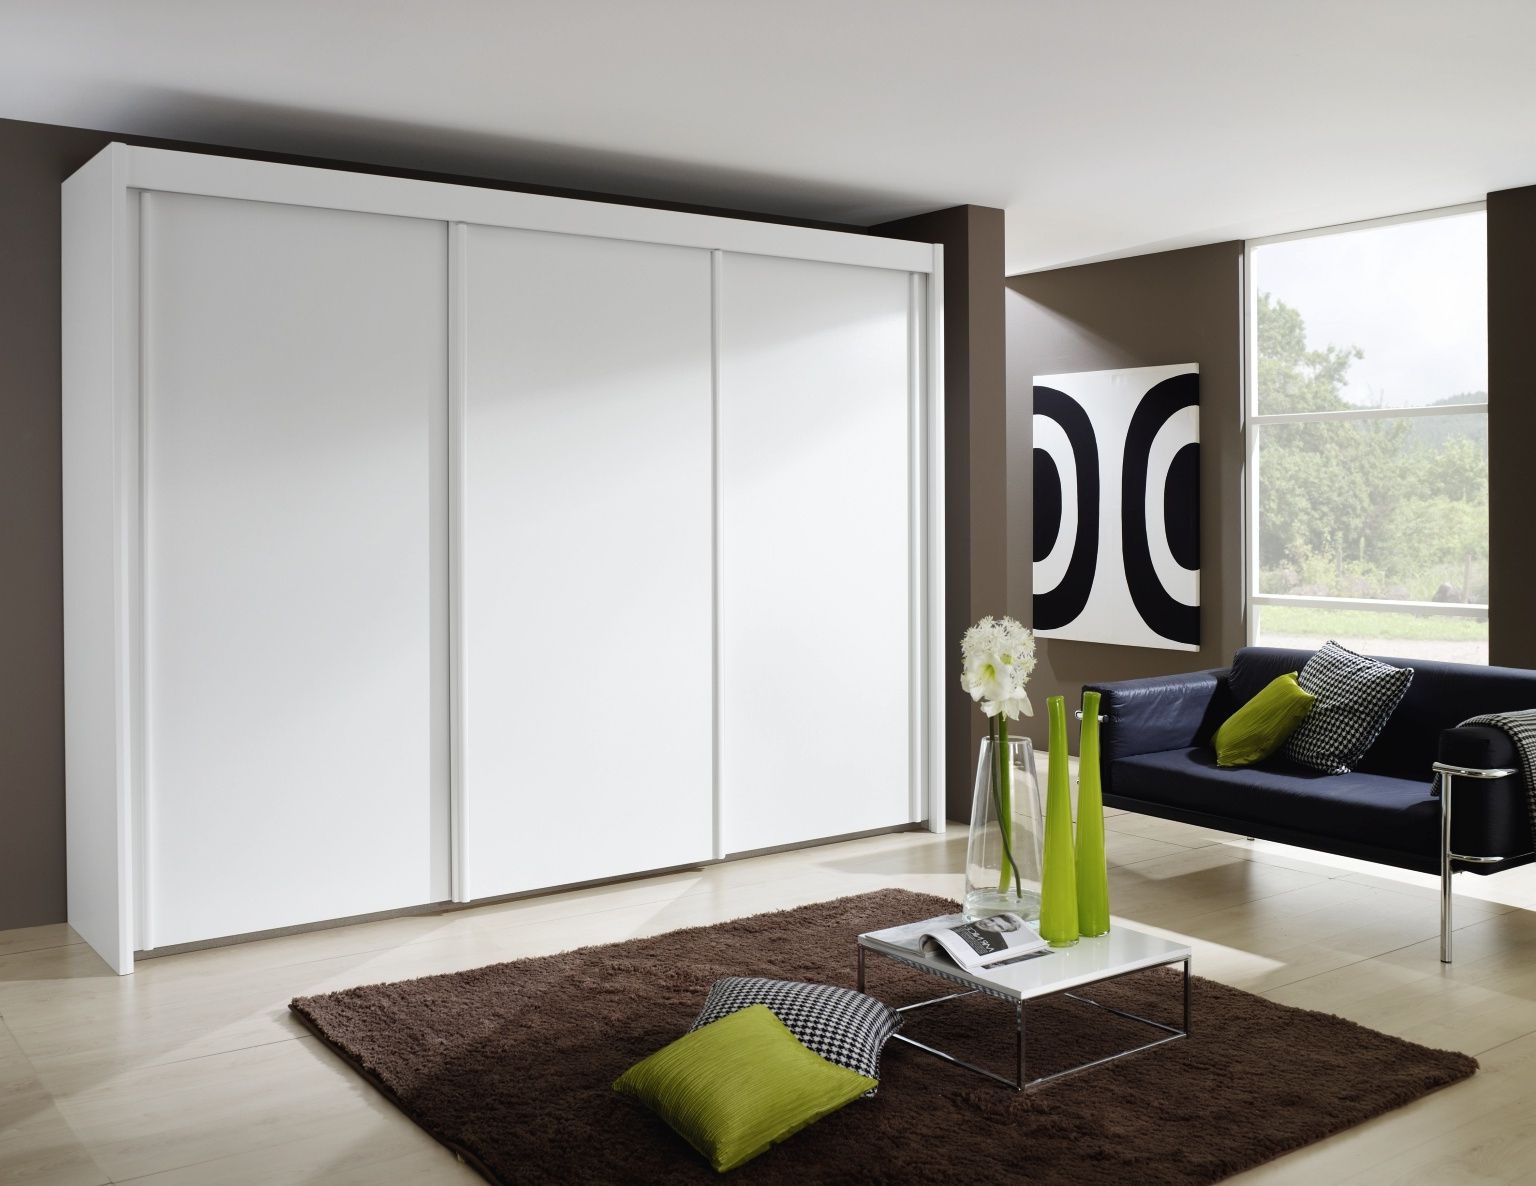 Rauch Imperial 3 Door Sliding Wardrobe In White – W 280cm – Cfs Furniture Uk With 3 Door White Wardrobes (Gallery 20 of 20)